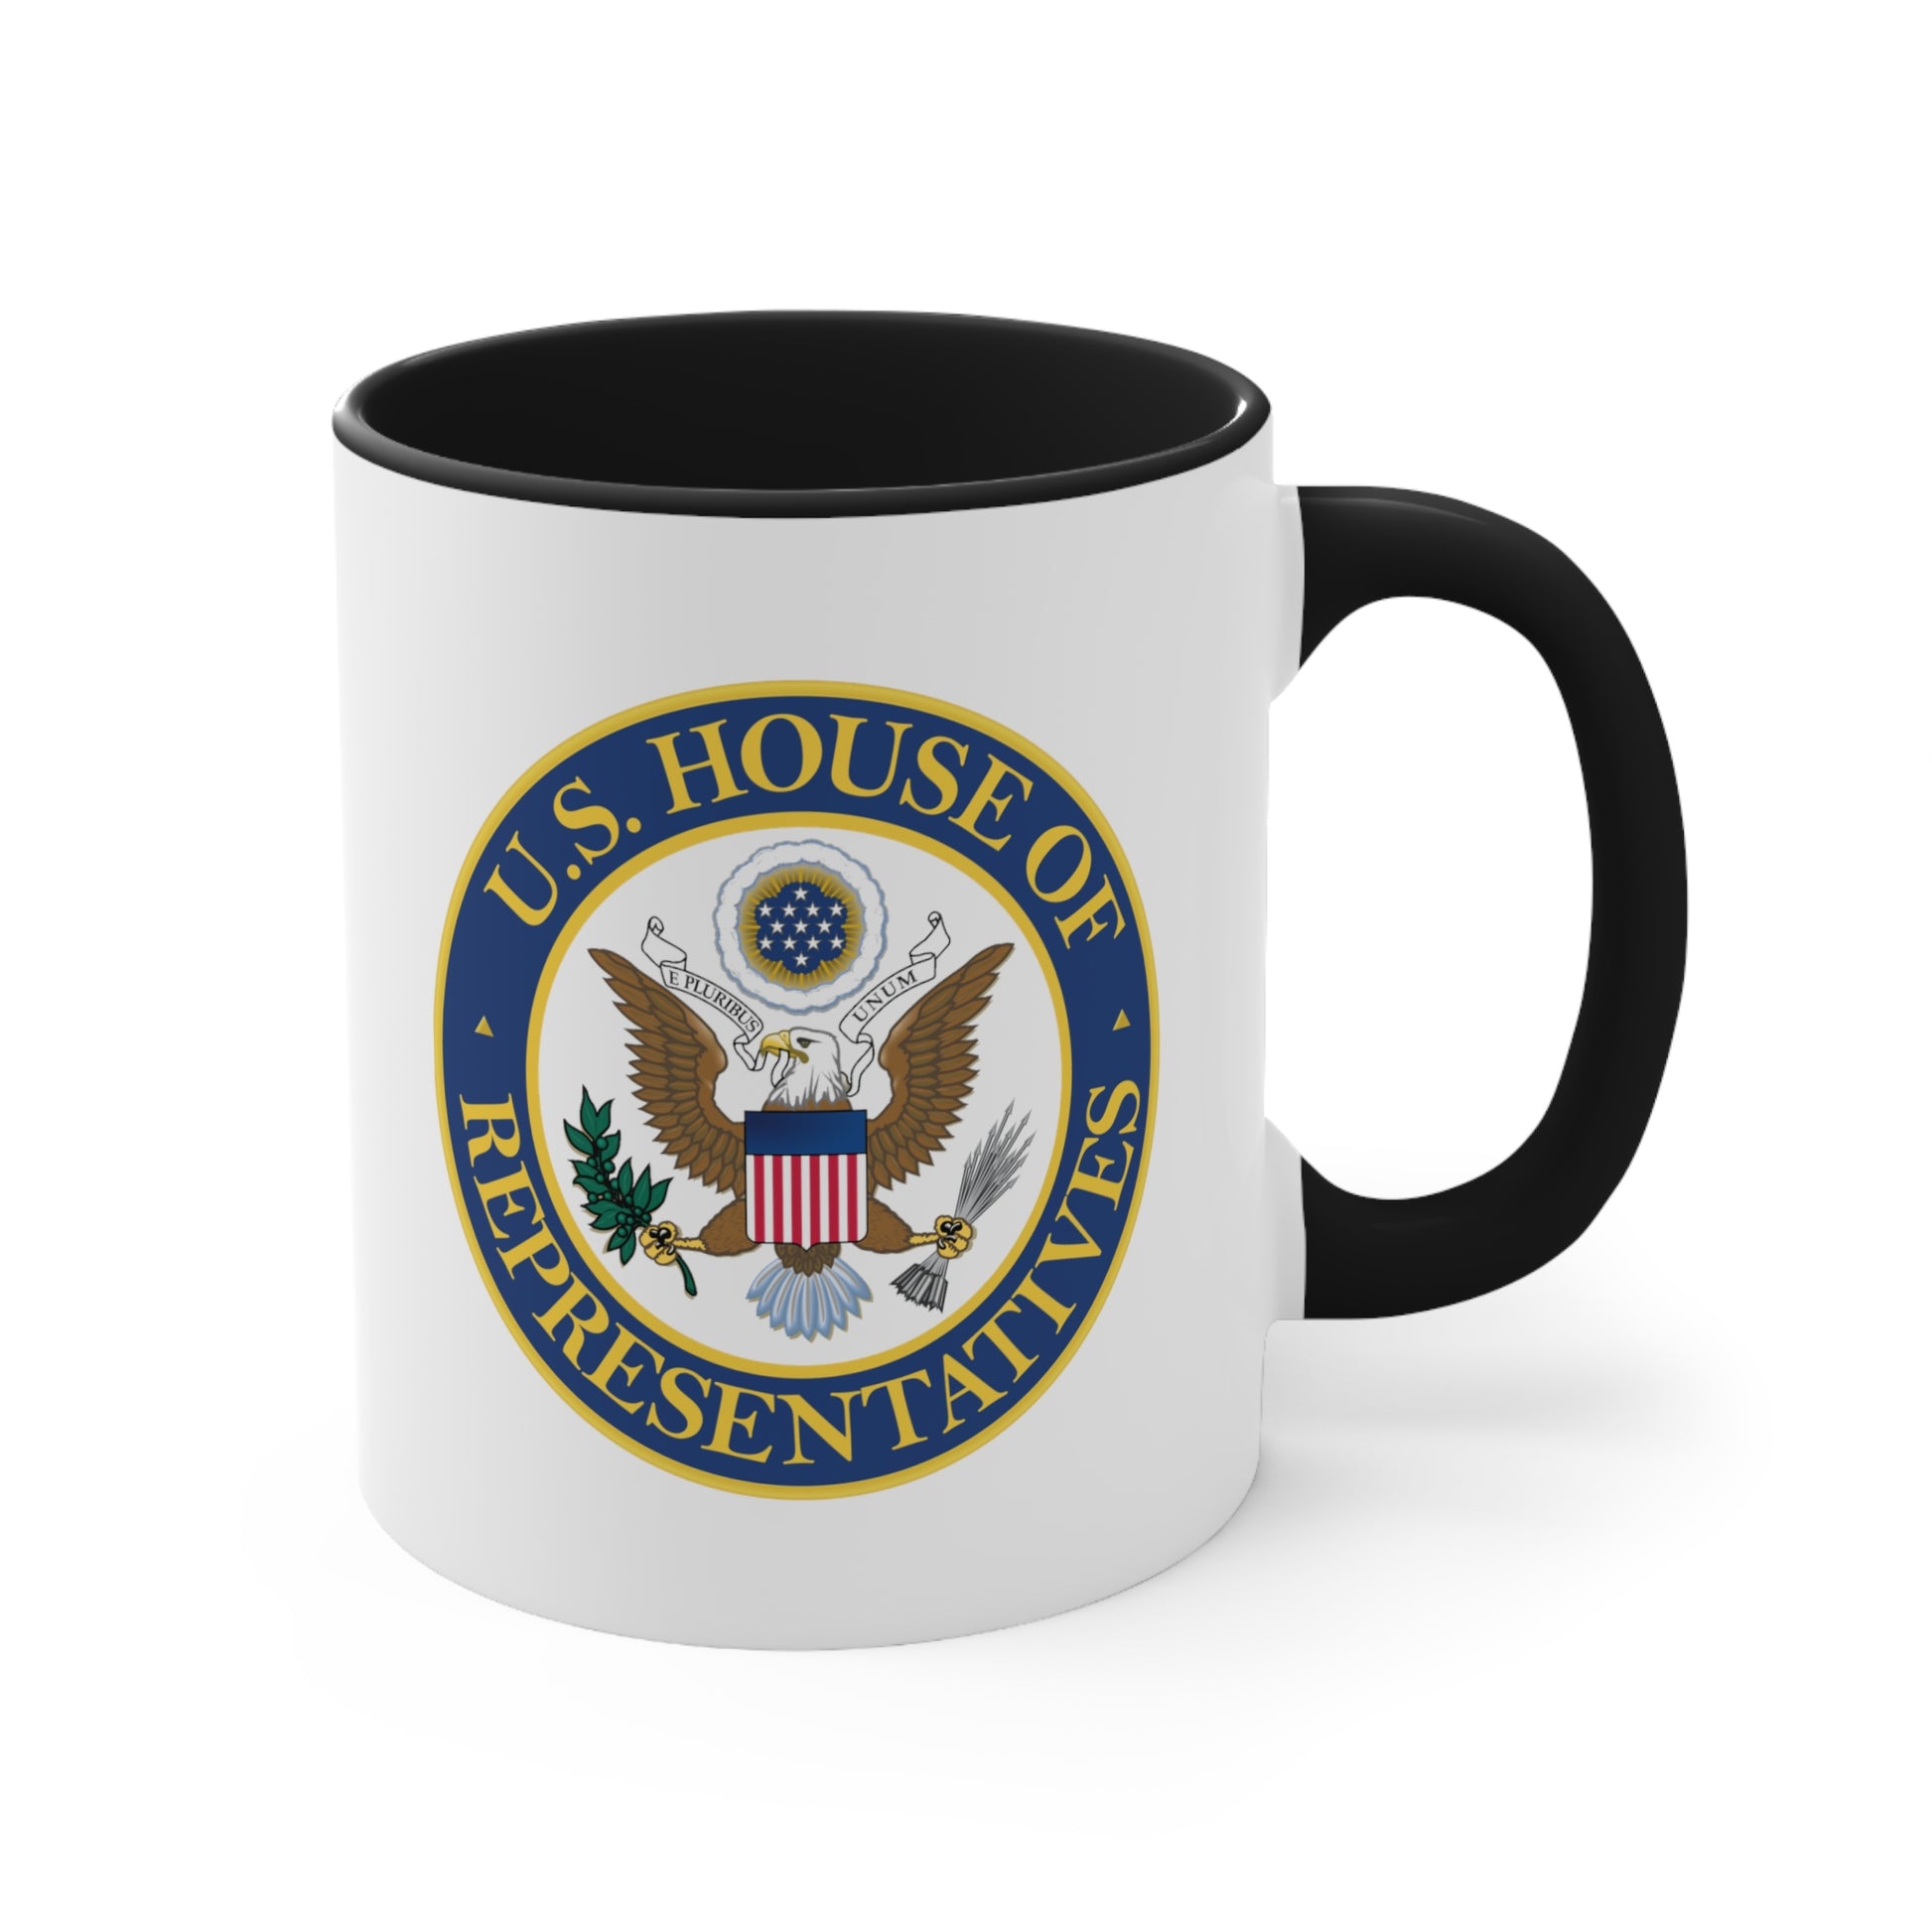 US House of Representatives Coffee Mug - Double Sided Black Accent White Ceramic 11oz by TheGlassyLass.com